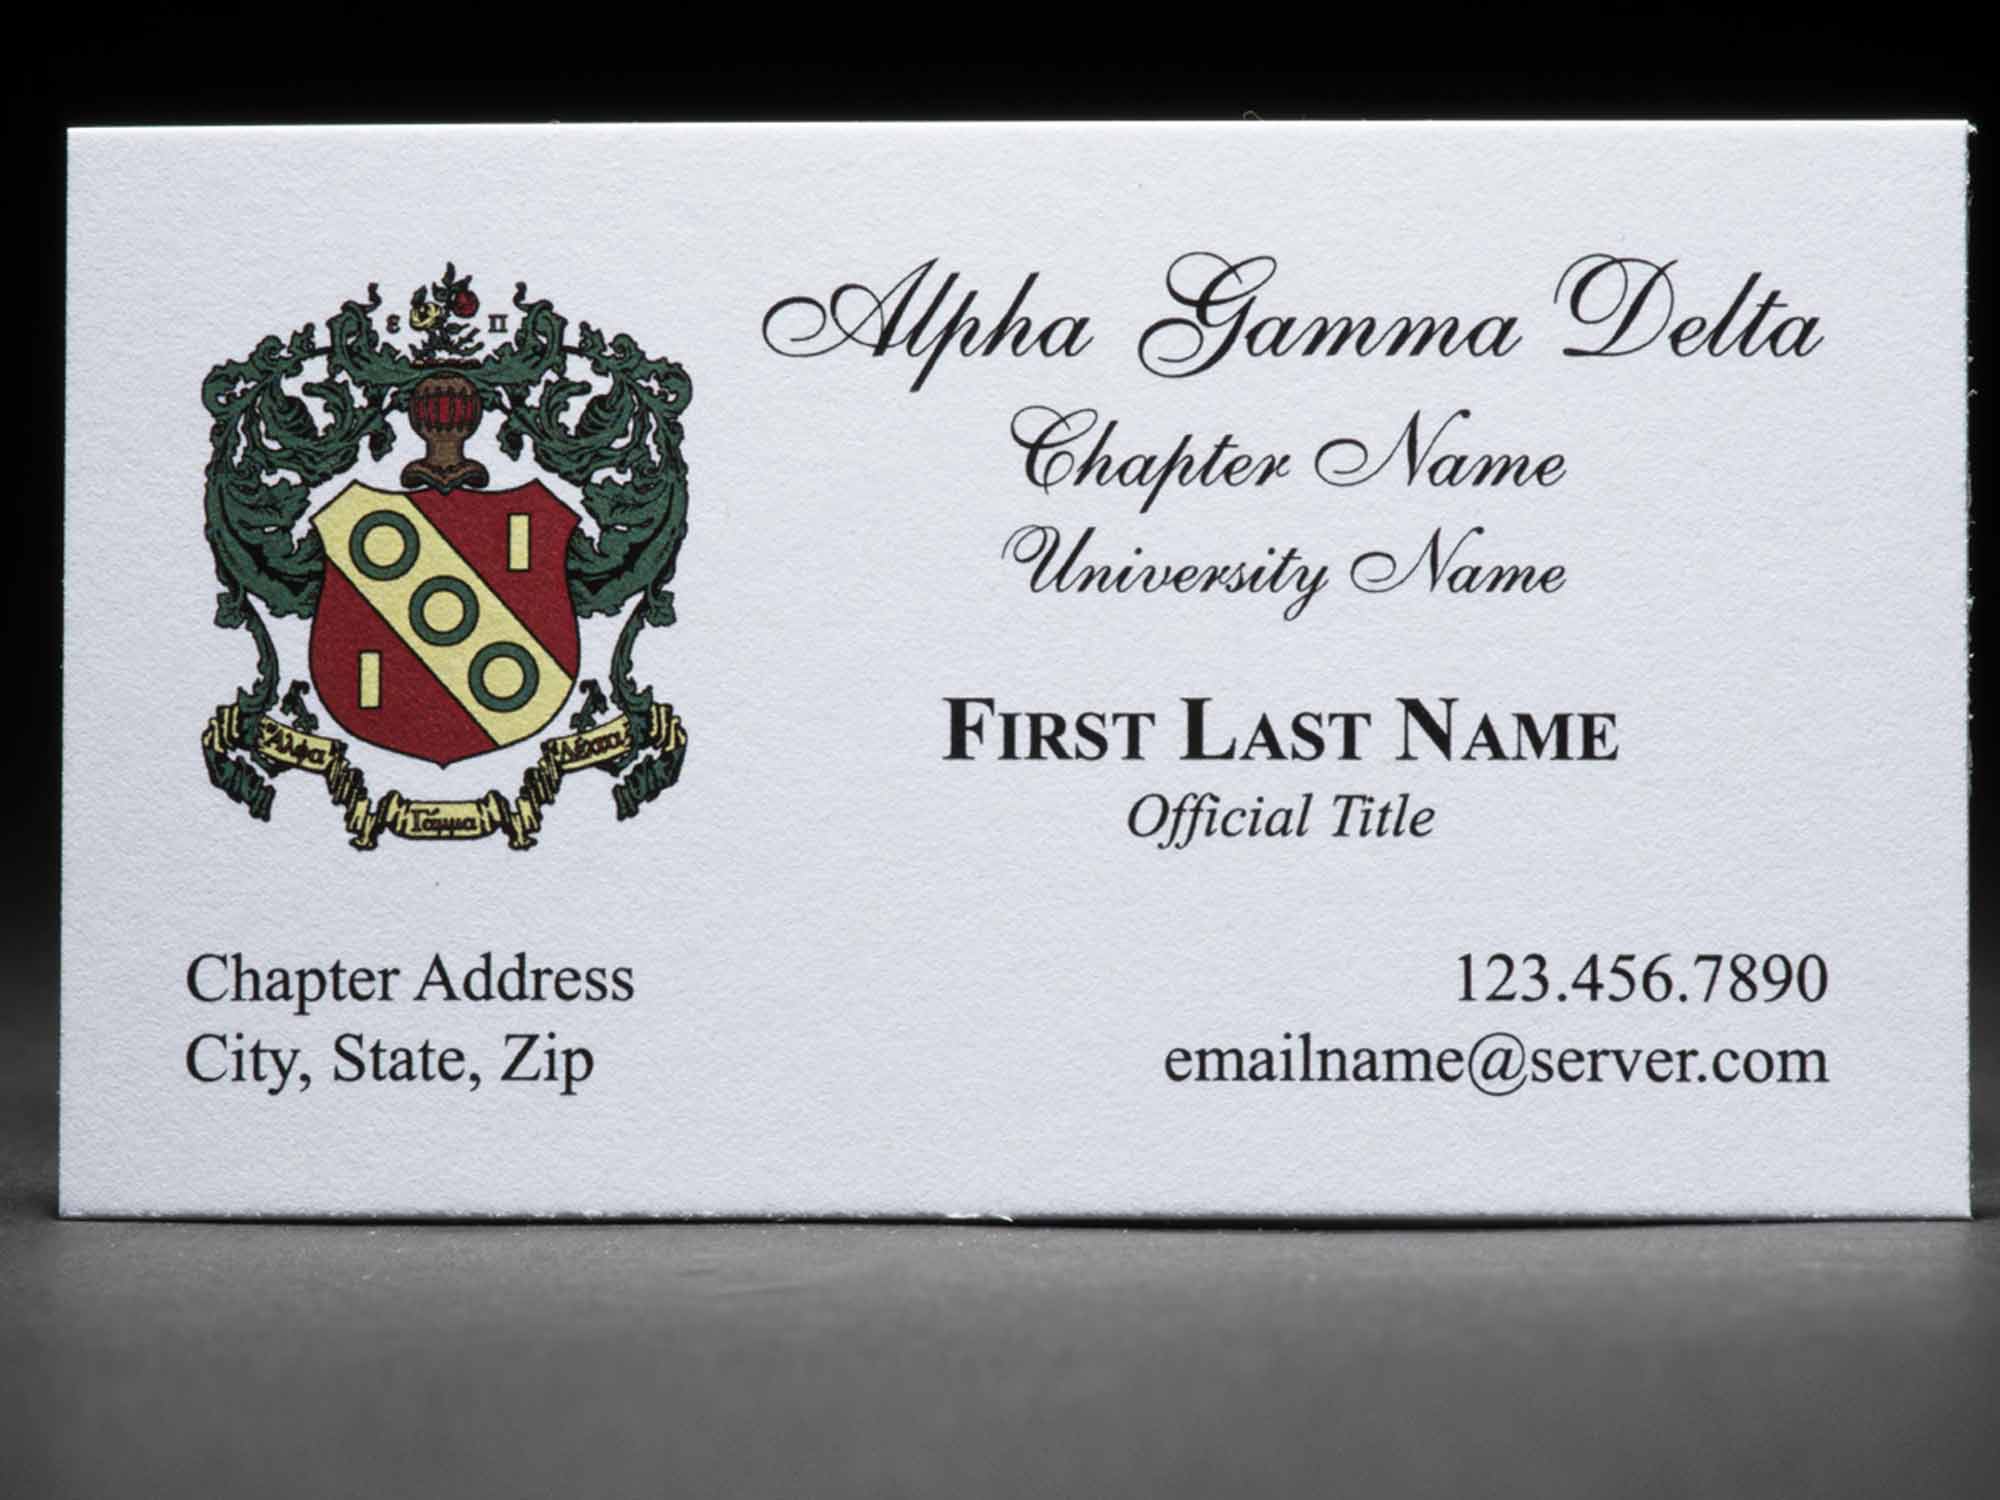 Business Cards Alpha Gamma Delta